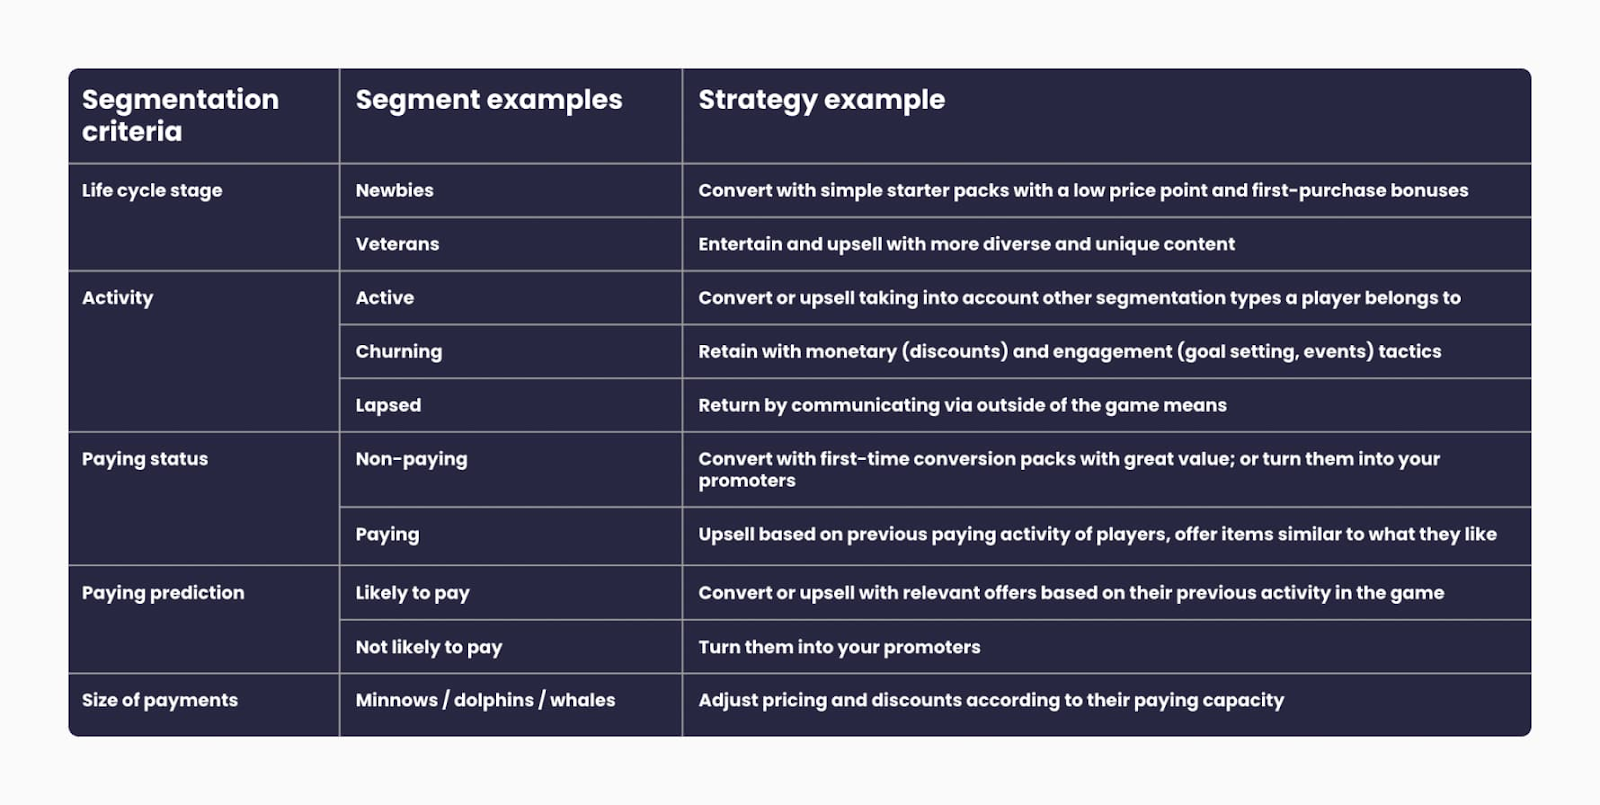 Engagement strategies based on segmentation